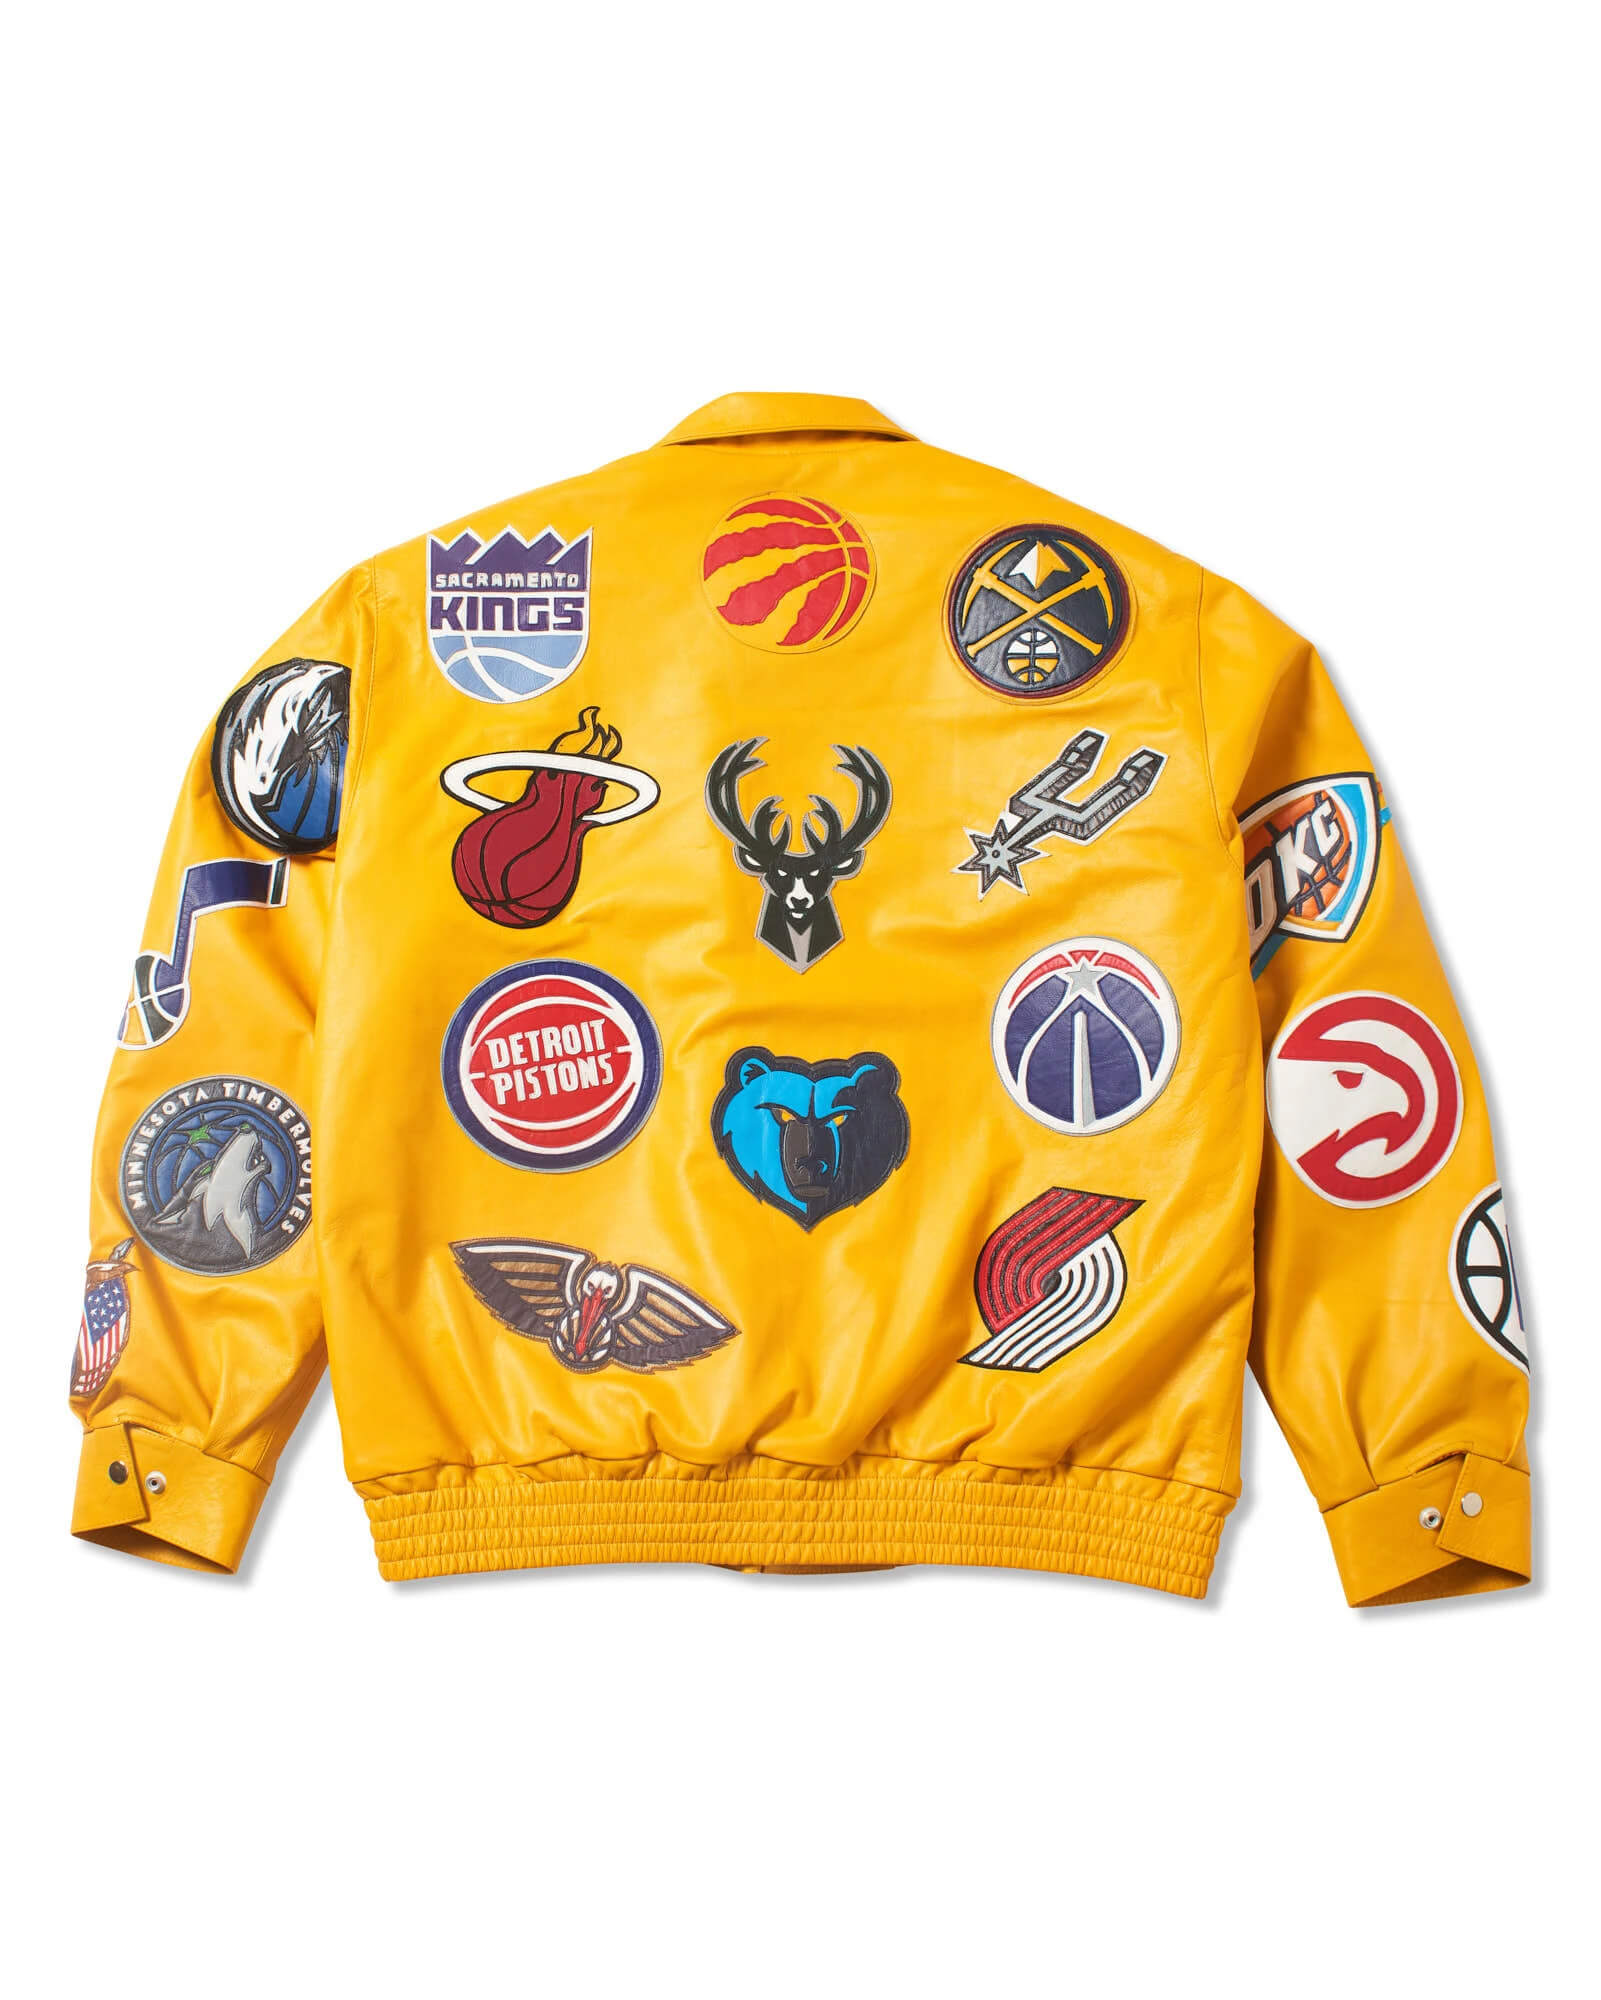 Toronto Raptors Jeff Hamilton Leather Jacket